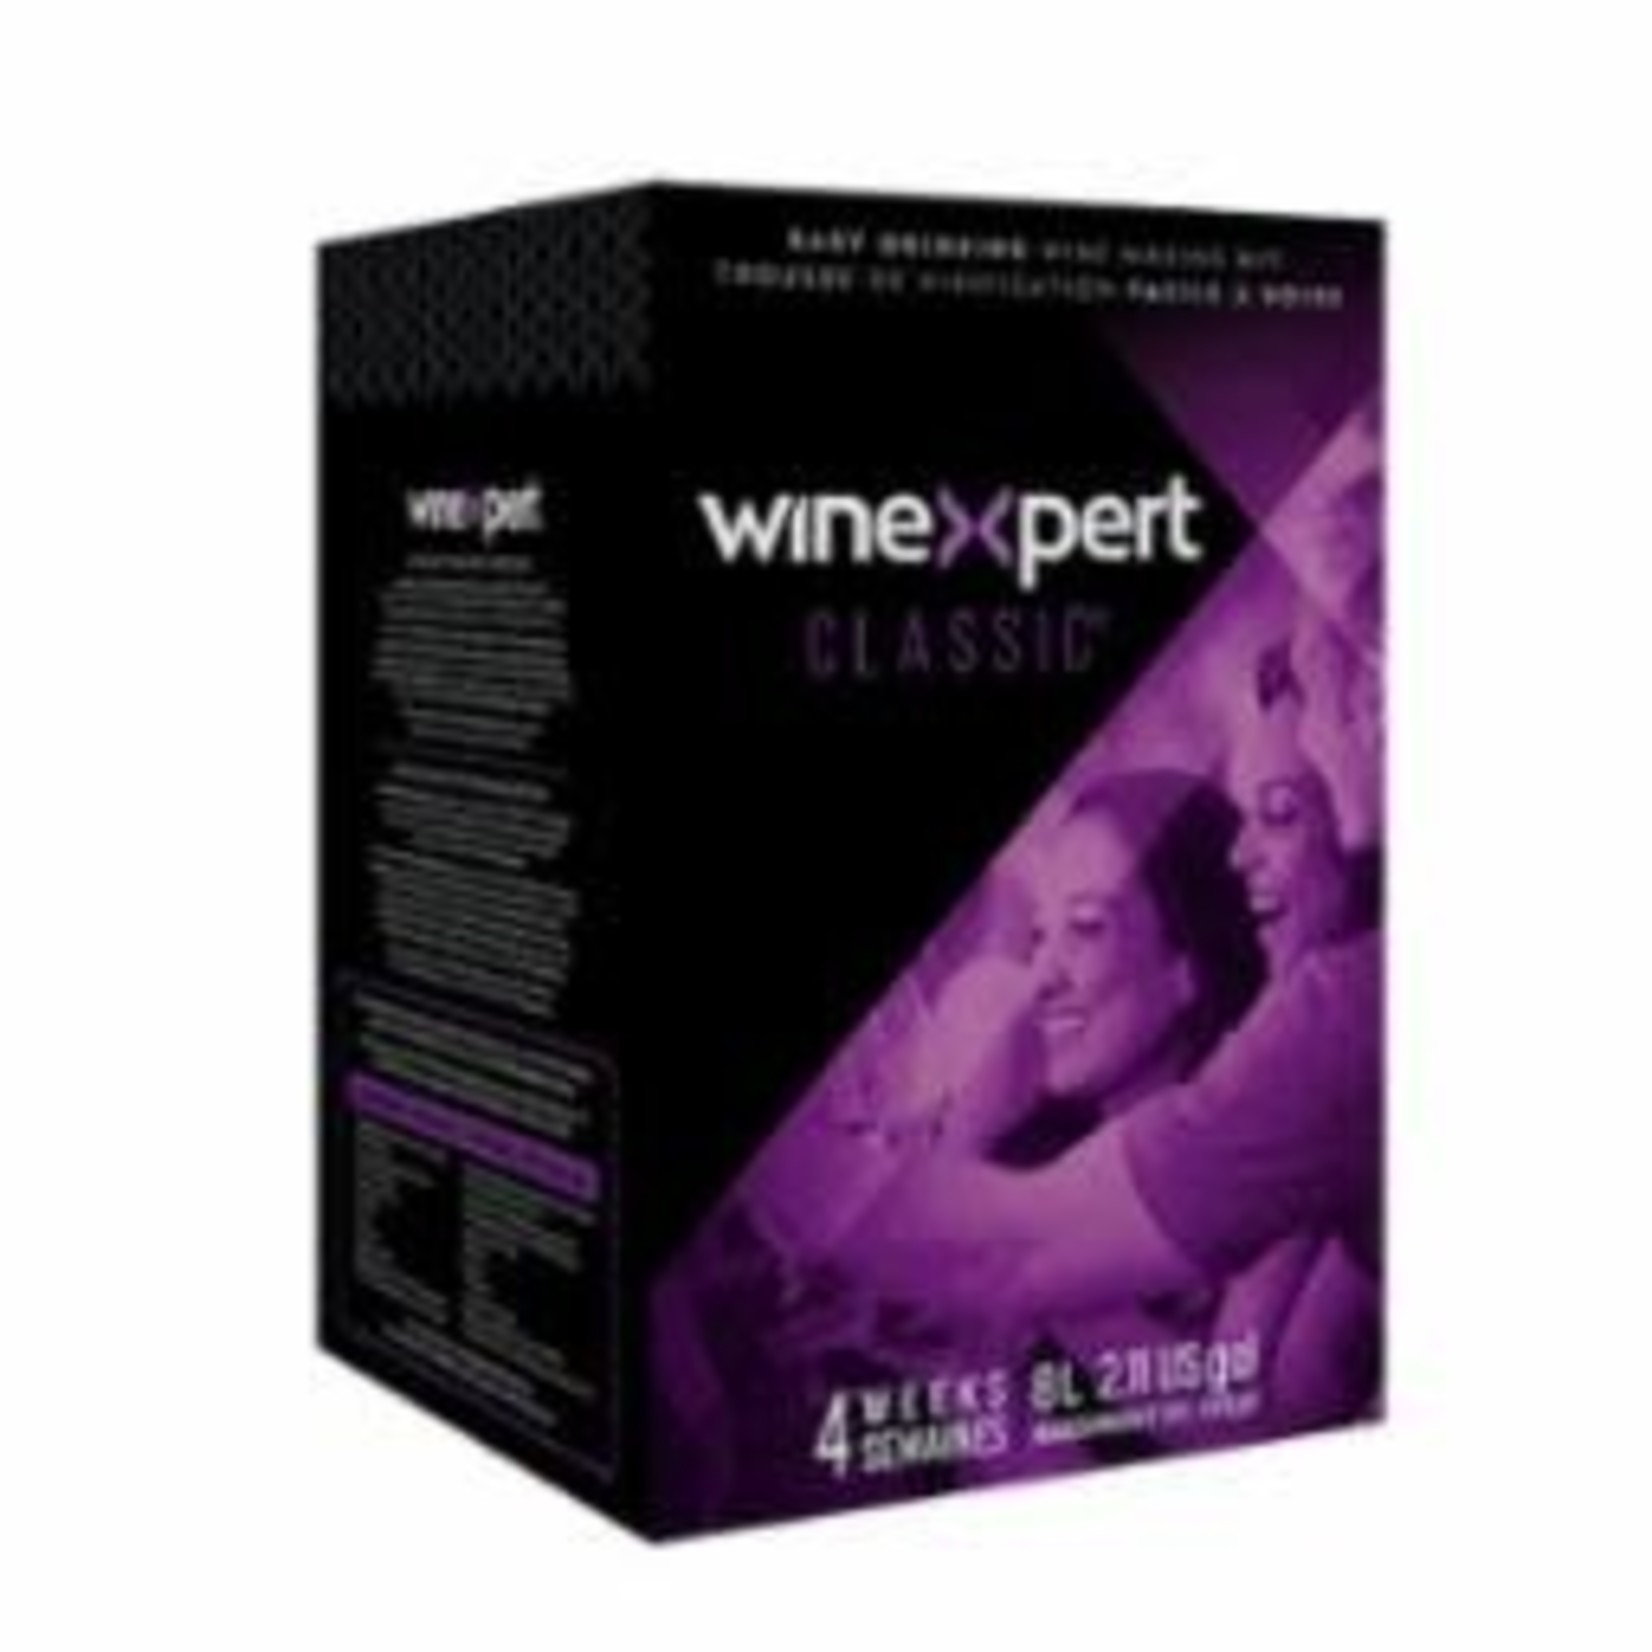 WineXpert Classic Chardonnay 8L